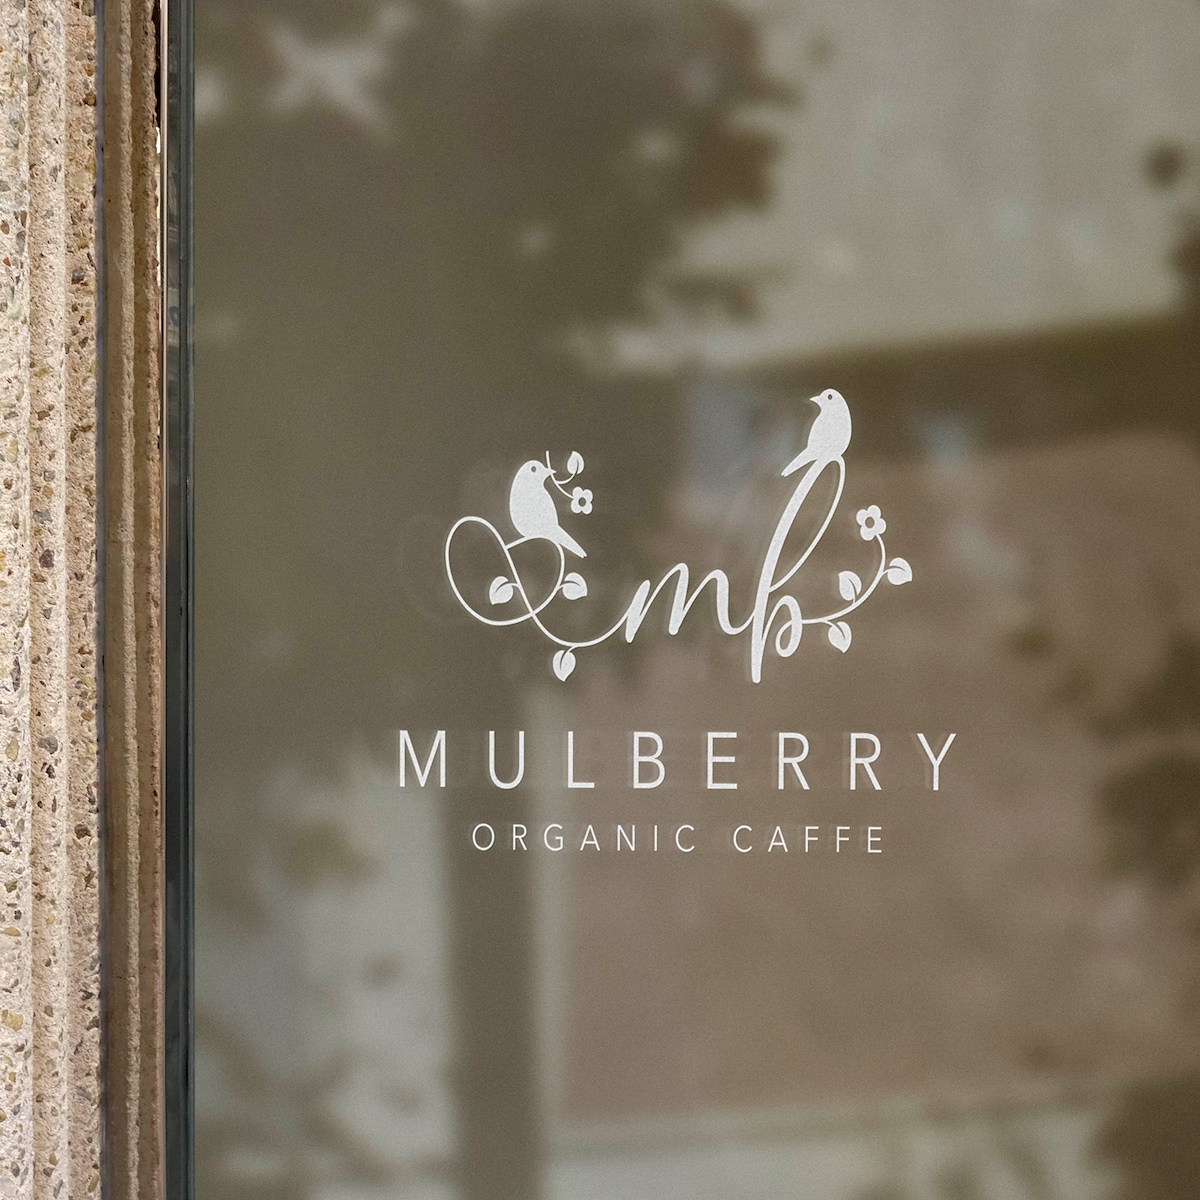 「MULBERRY様」カフェのロゴ